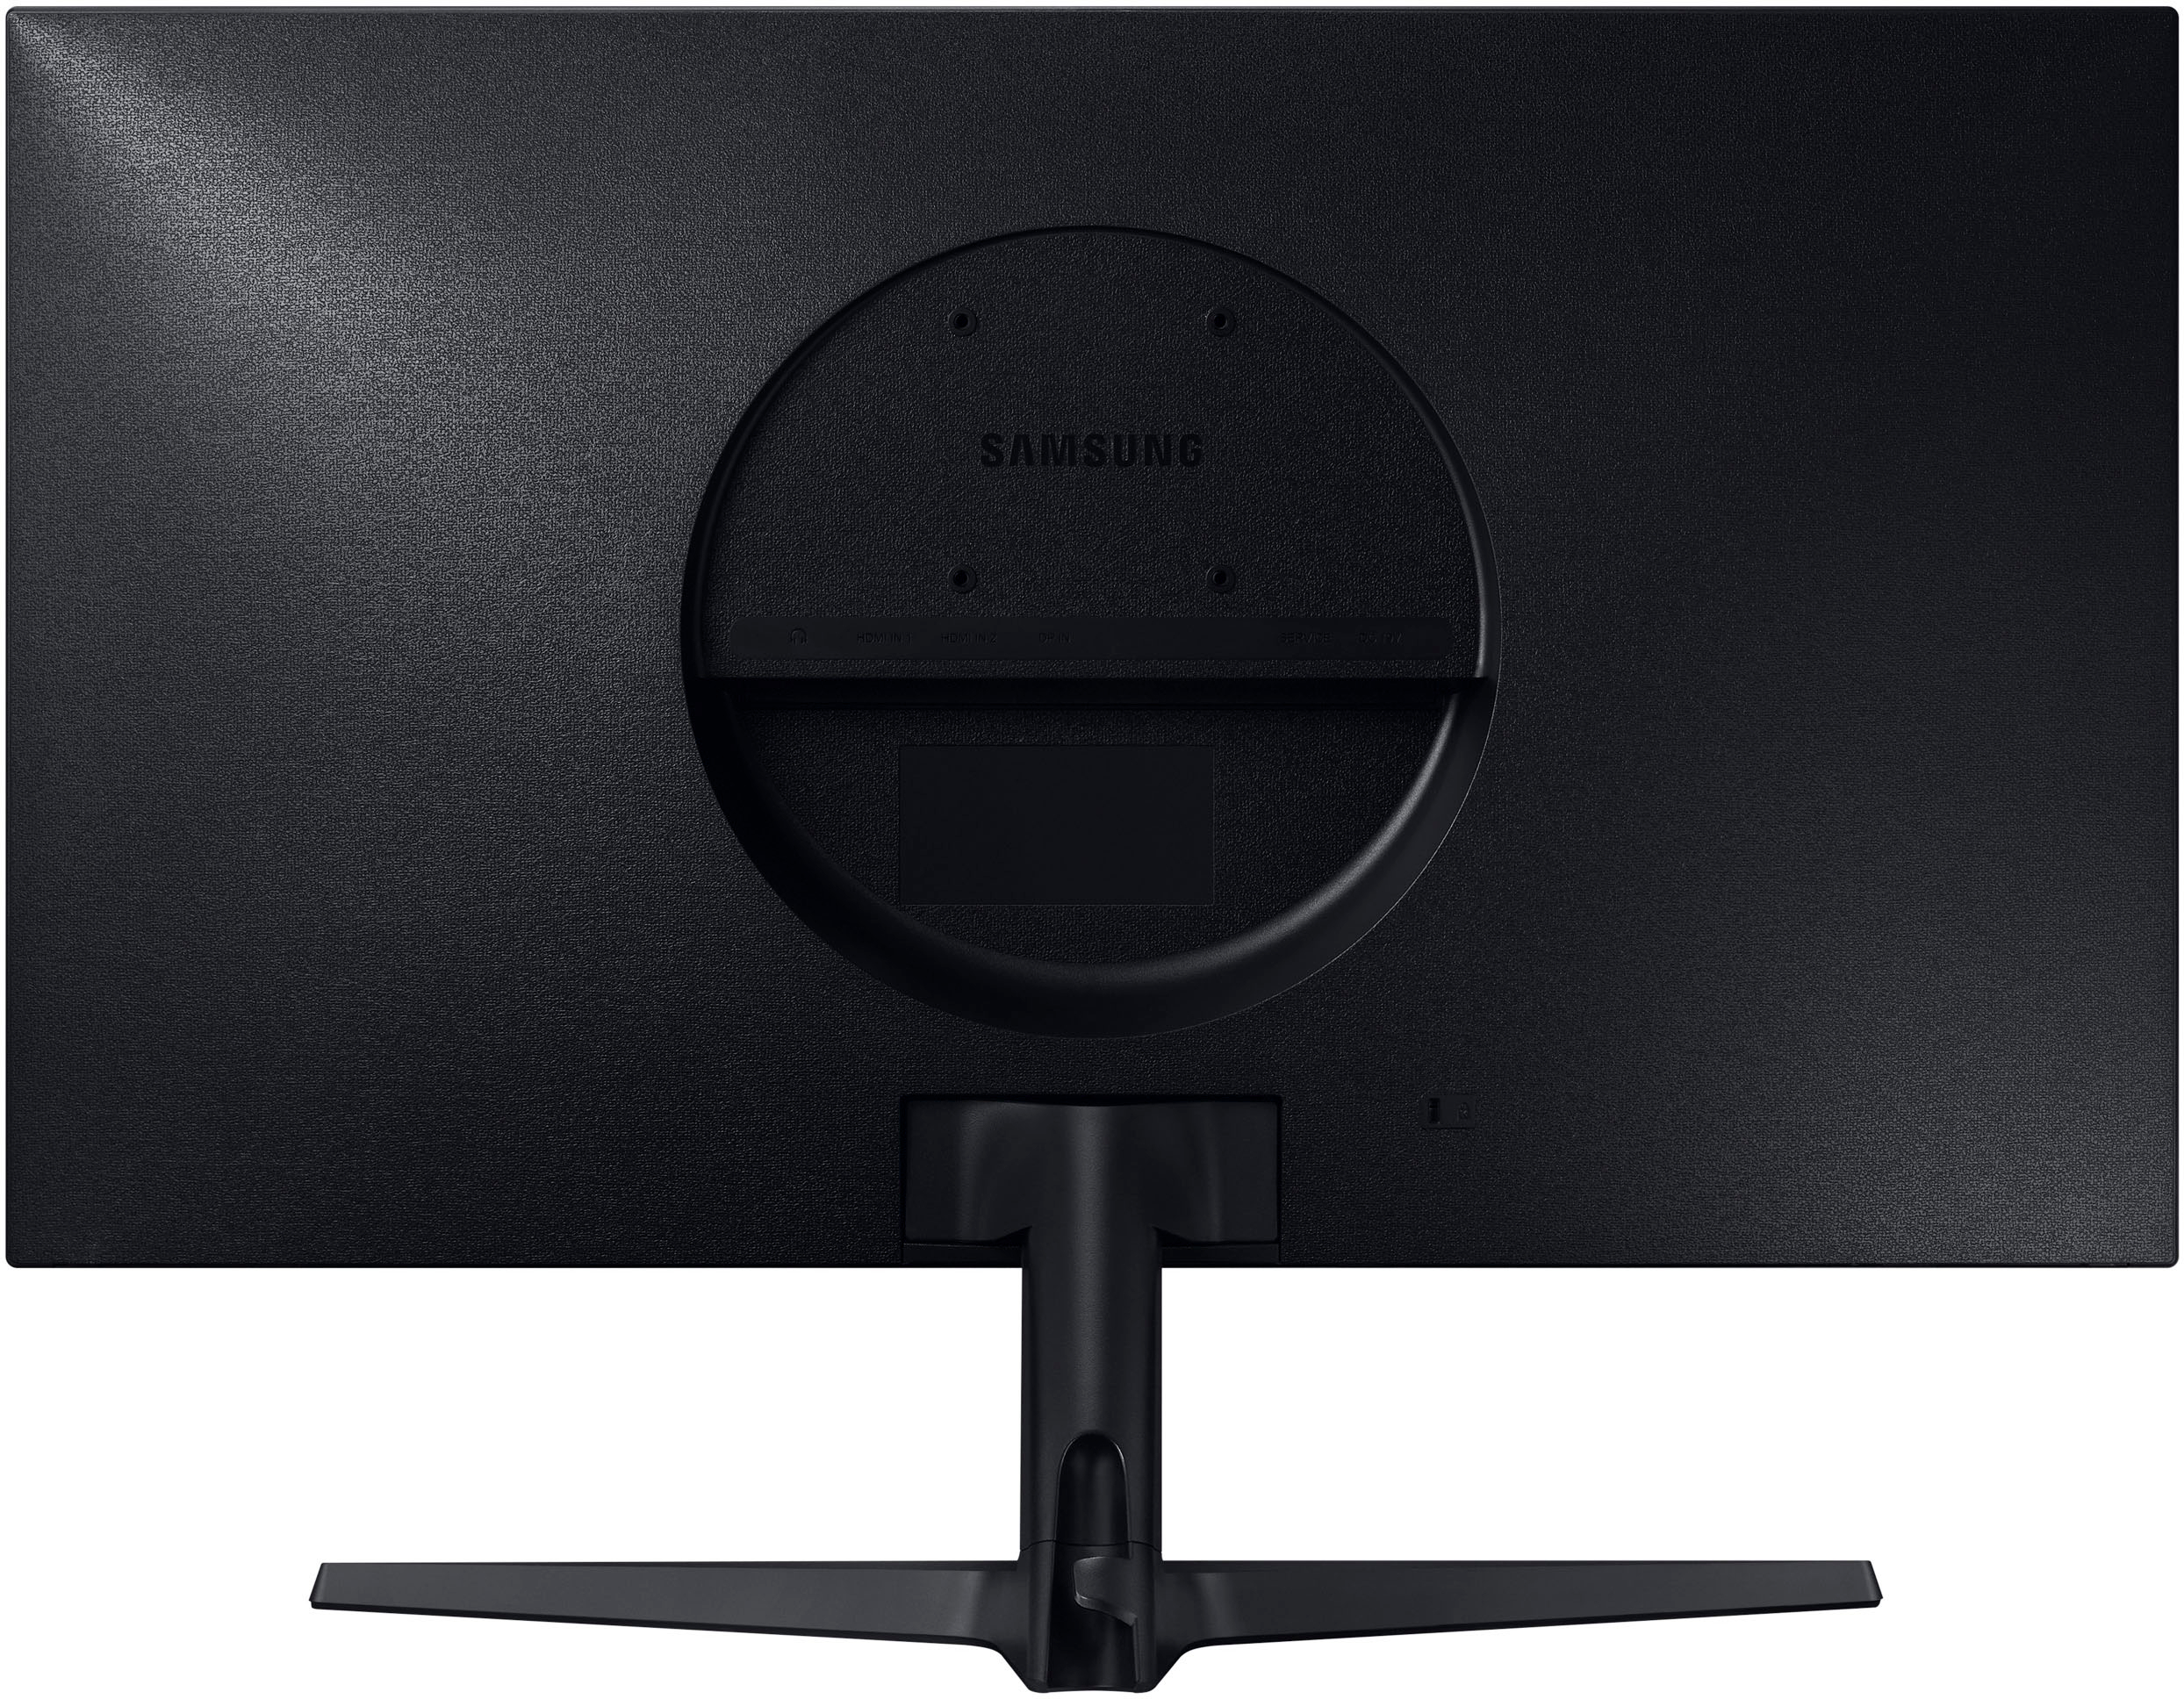 Back View: Samsung - SE65 Series LS24E65KPLH/GO 23.6” LED FHD Monitor - Black